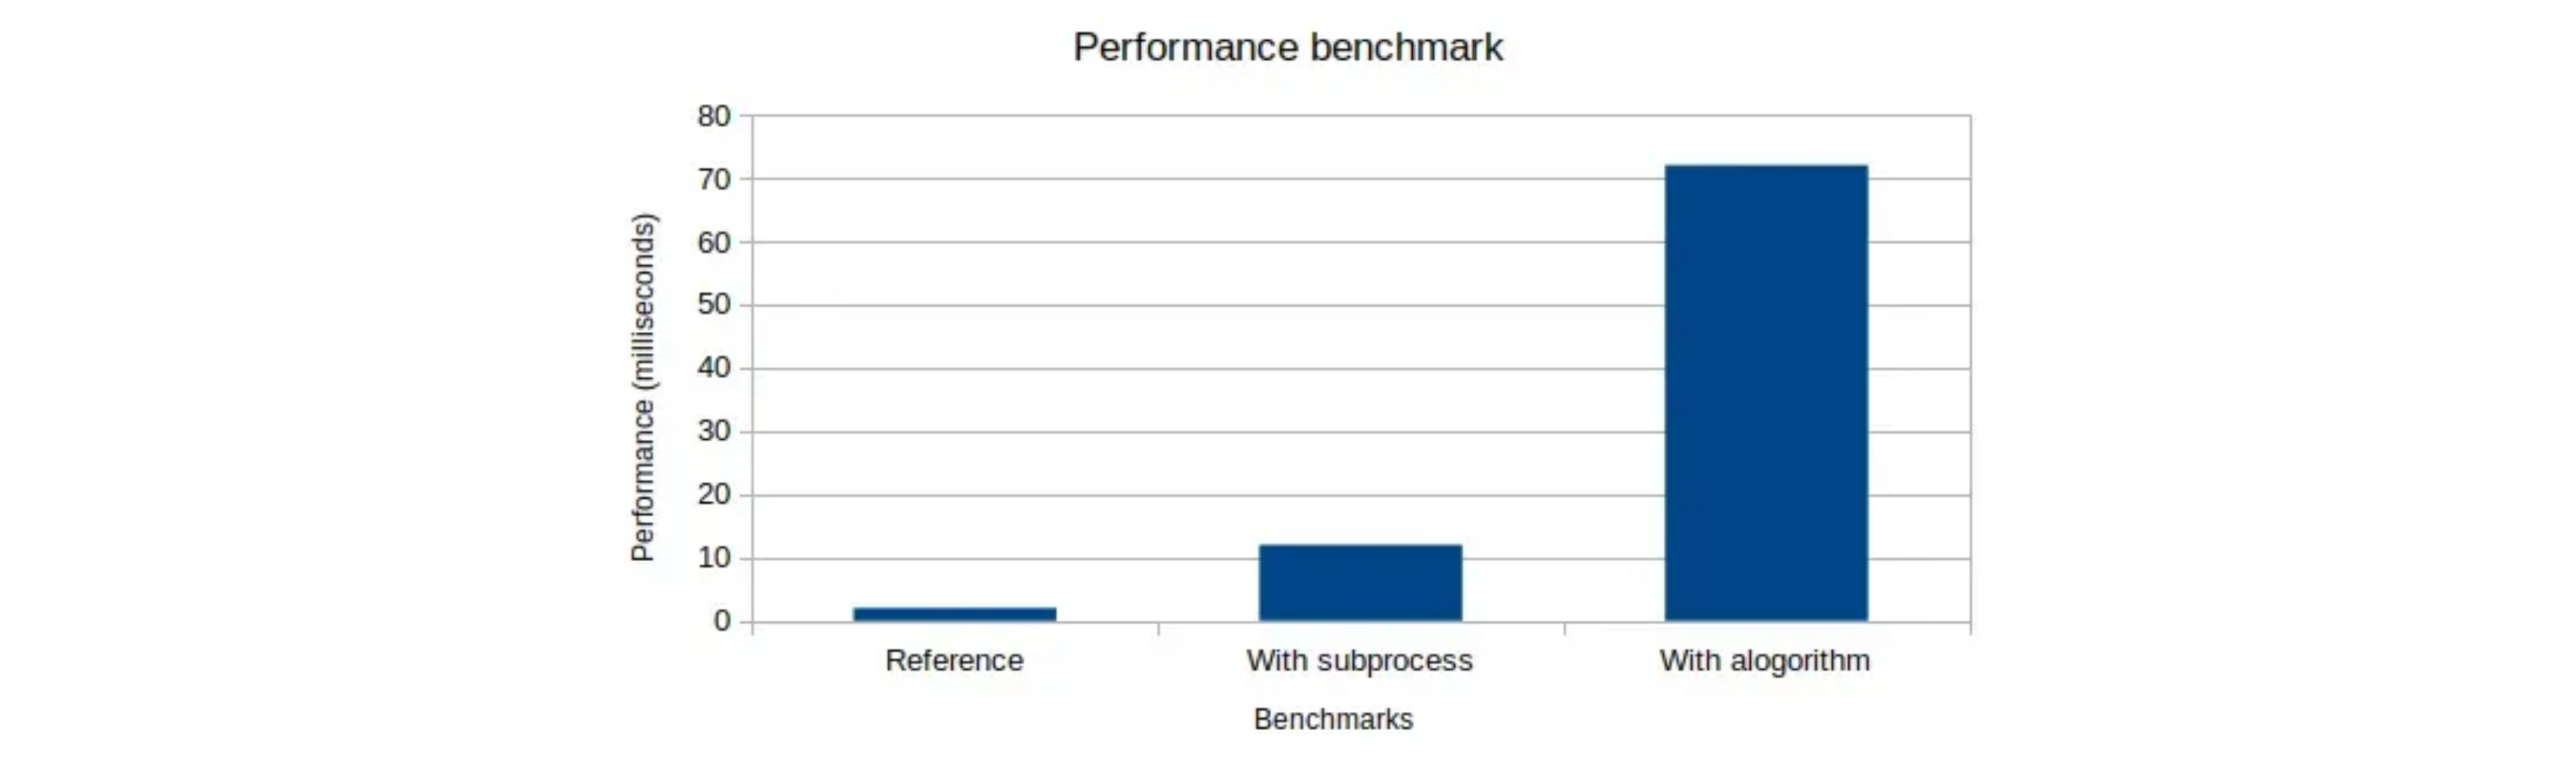 performance benchmark